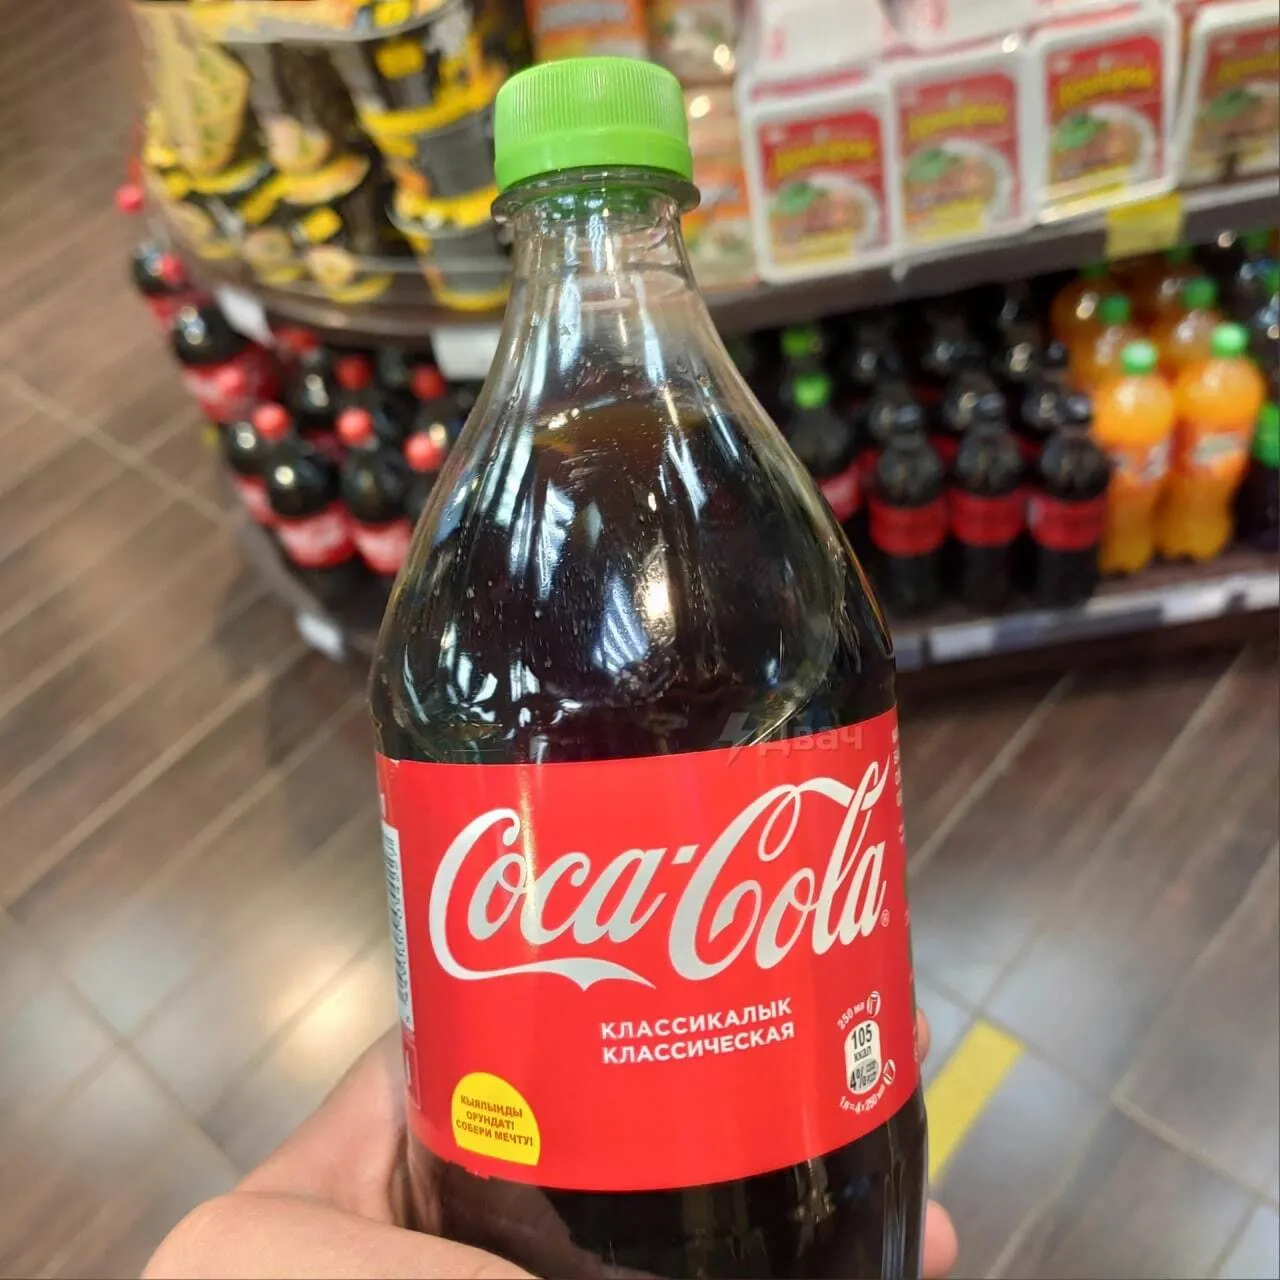      Coca-Cola qhiqqhiqhuiekroz